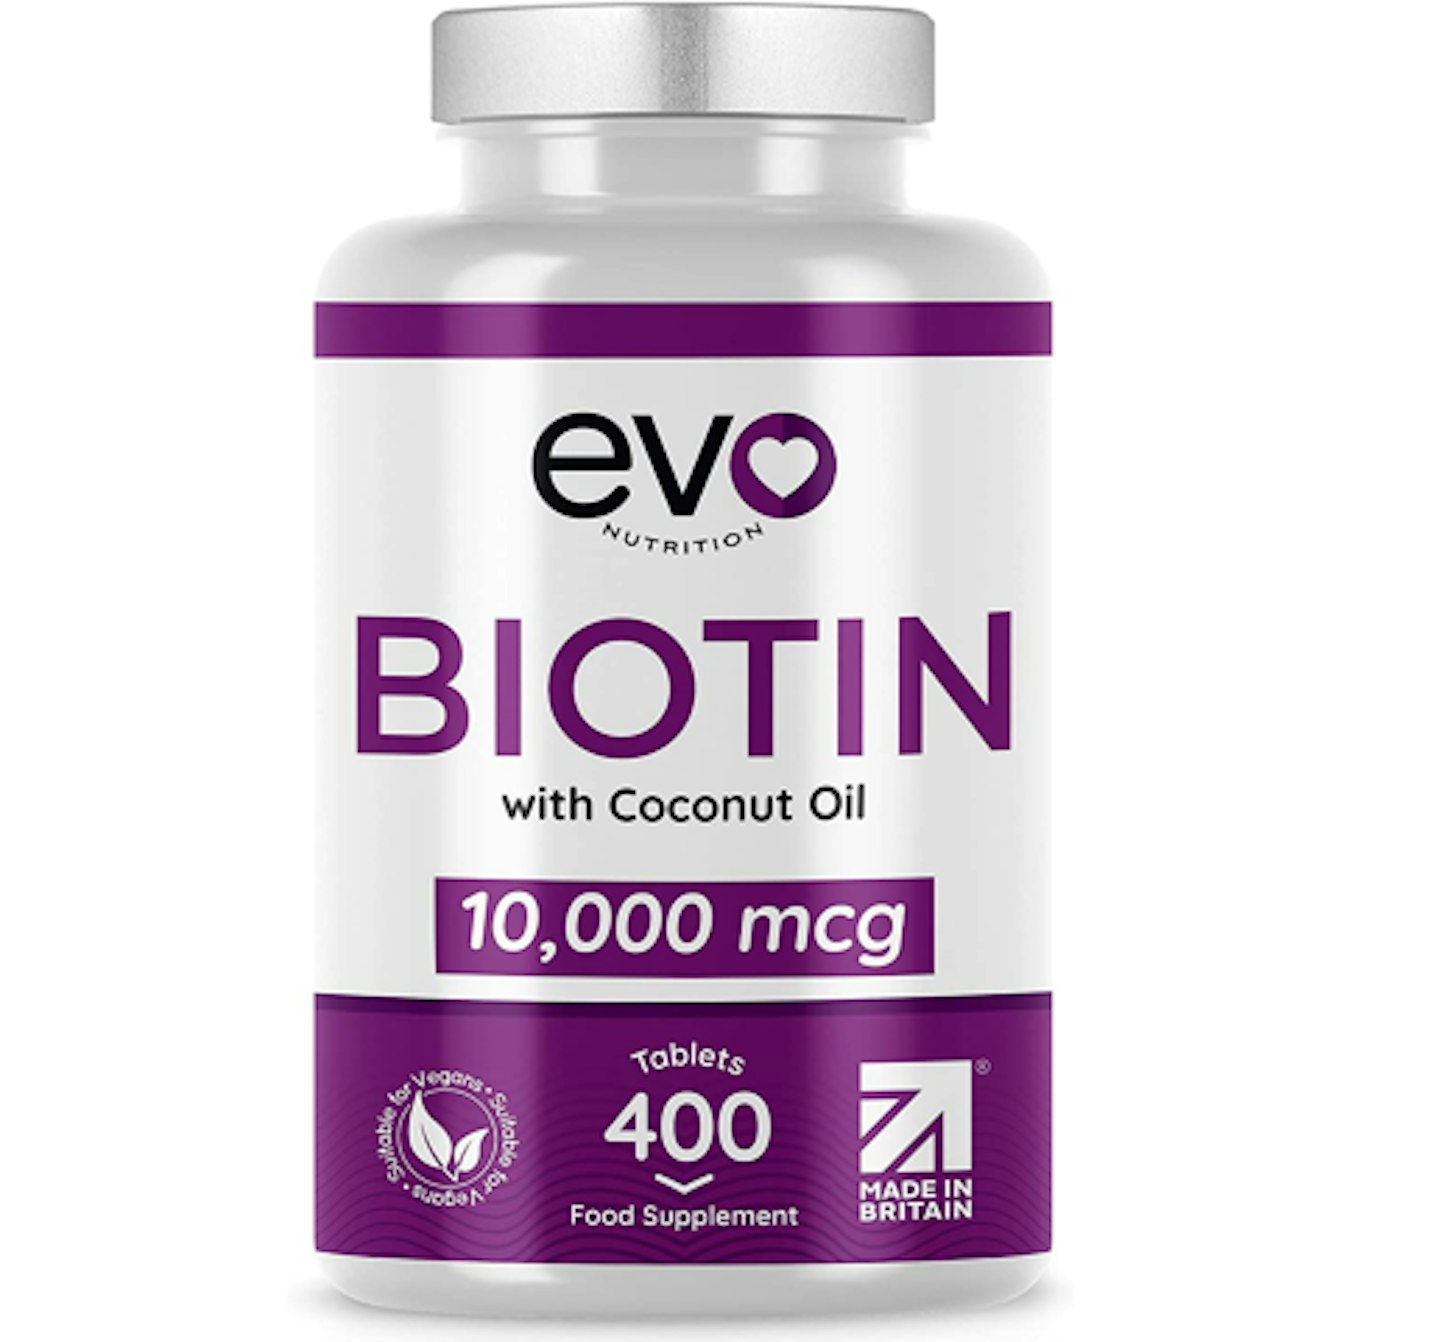 Evo Biotin hair supplements